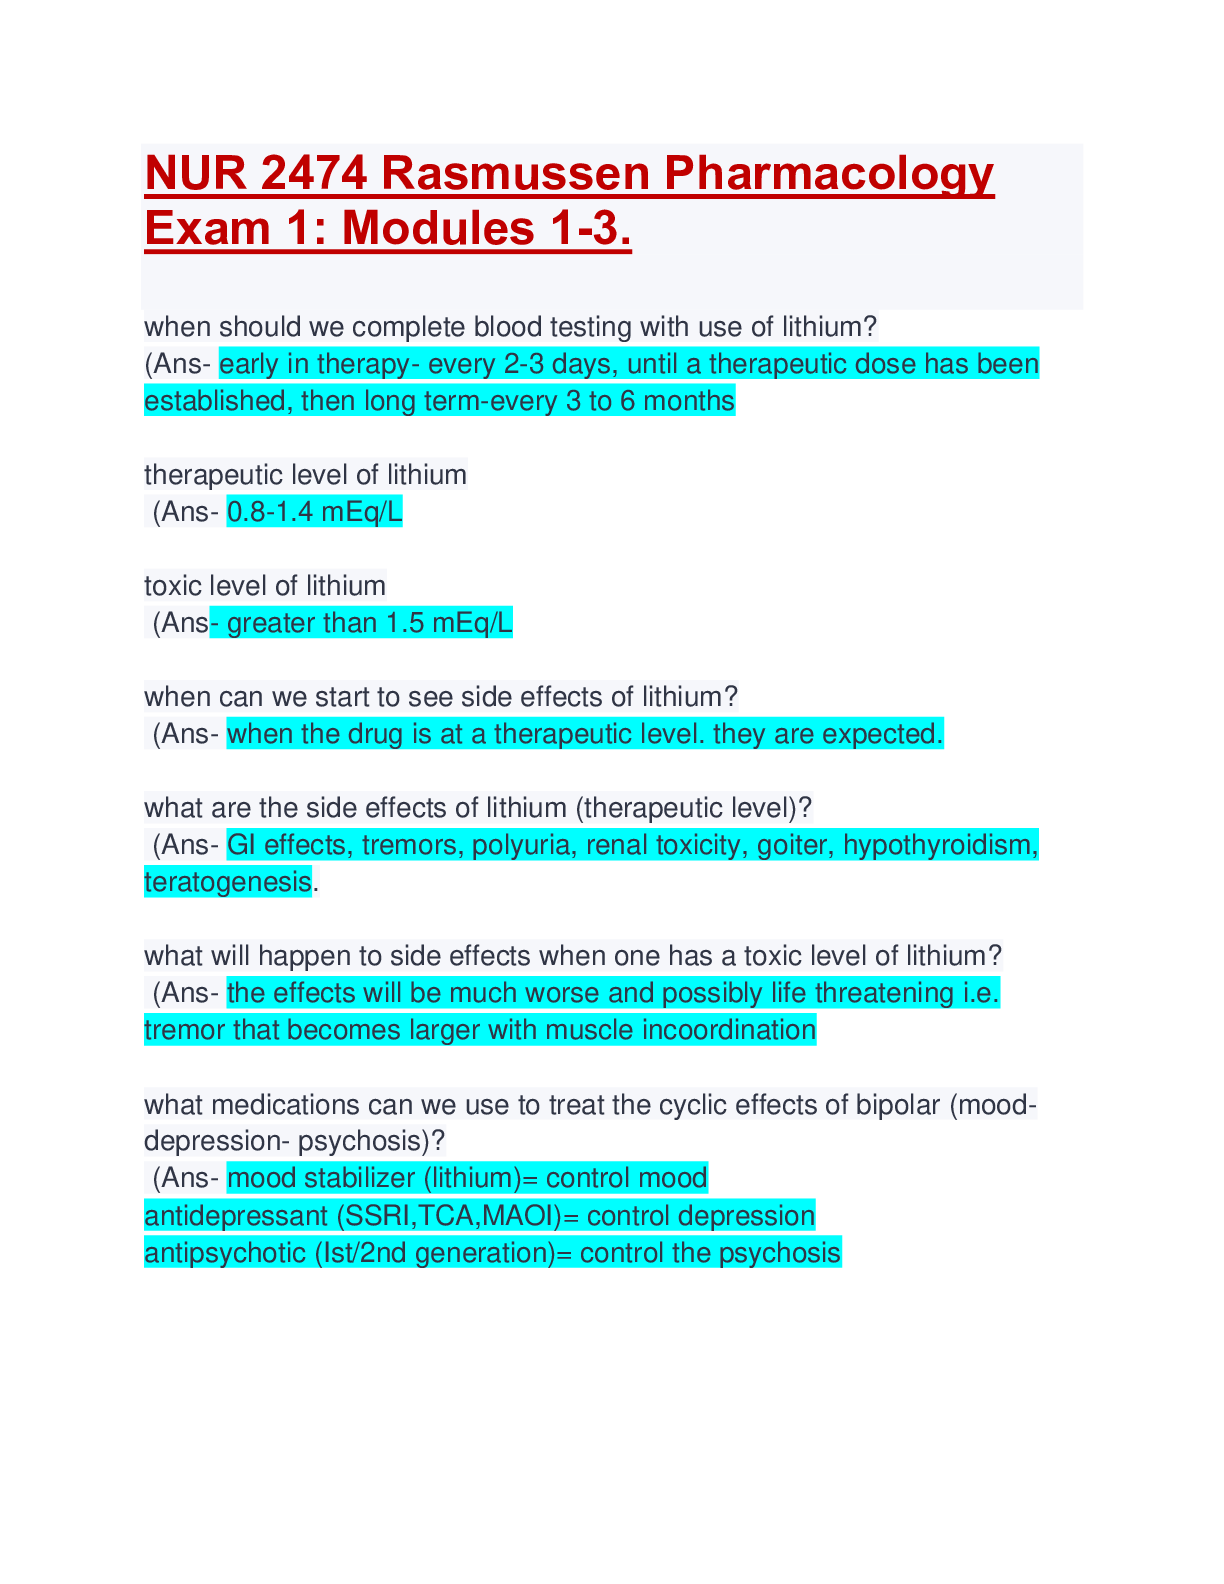 NUR 2474 Rasmussen Pharmacology Exam 1 Modules 13. Questions